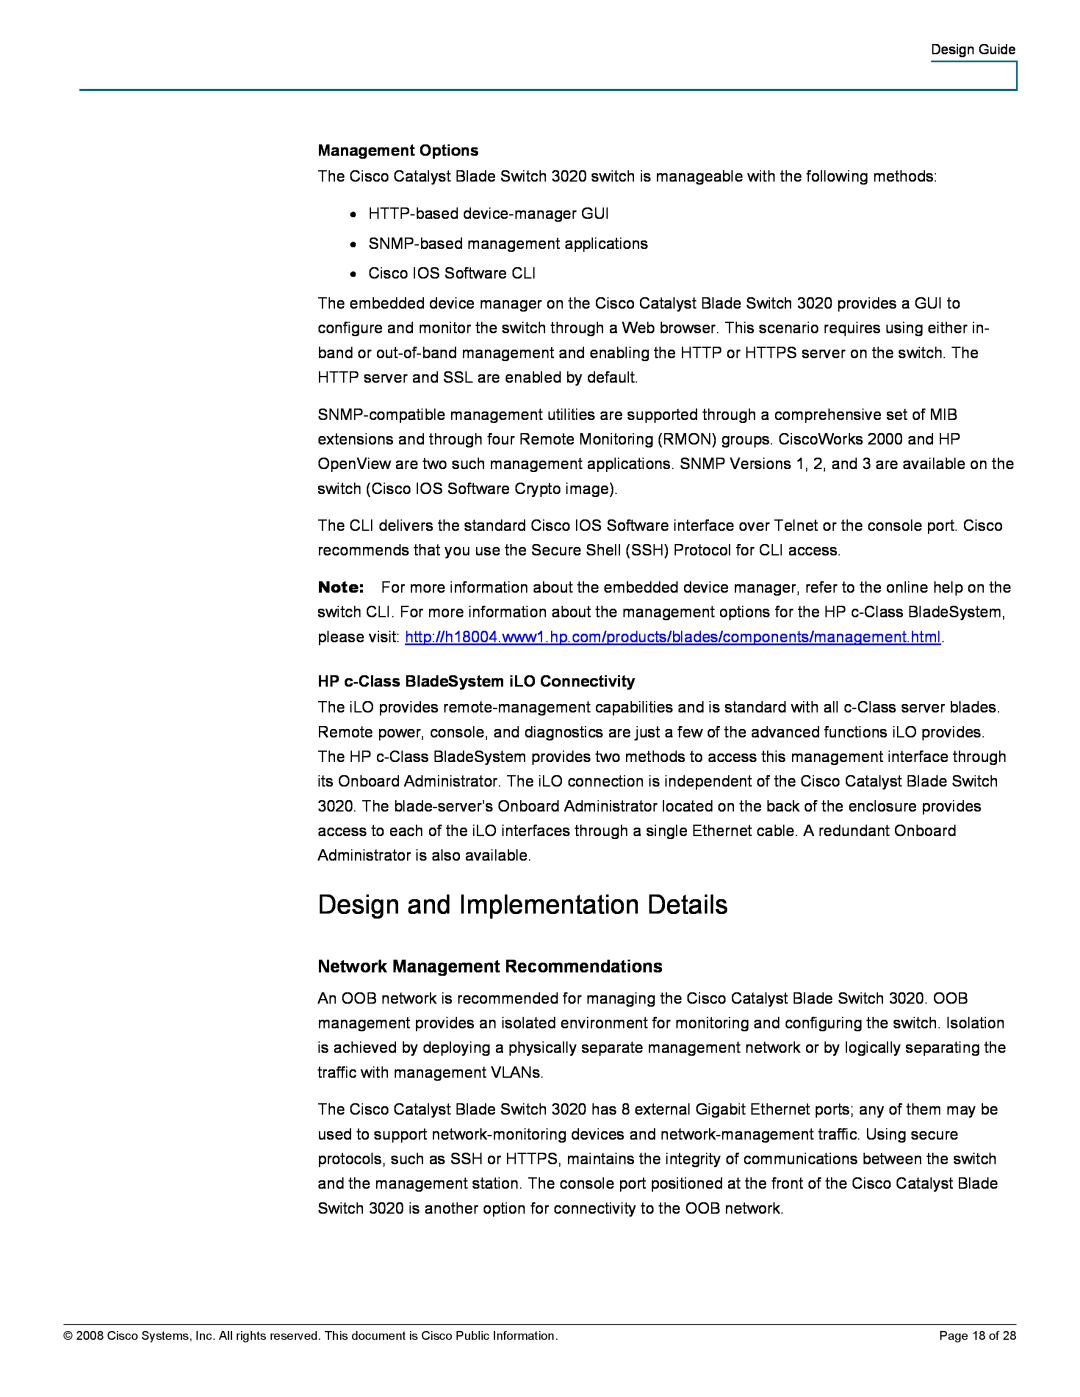 NAD 3020 manual Design and Implementation Details, Network Management Recommendations 